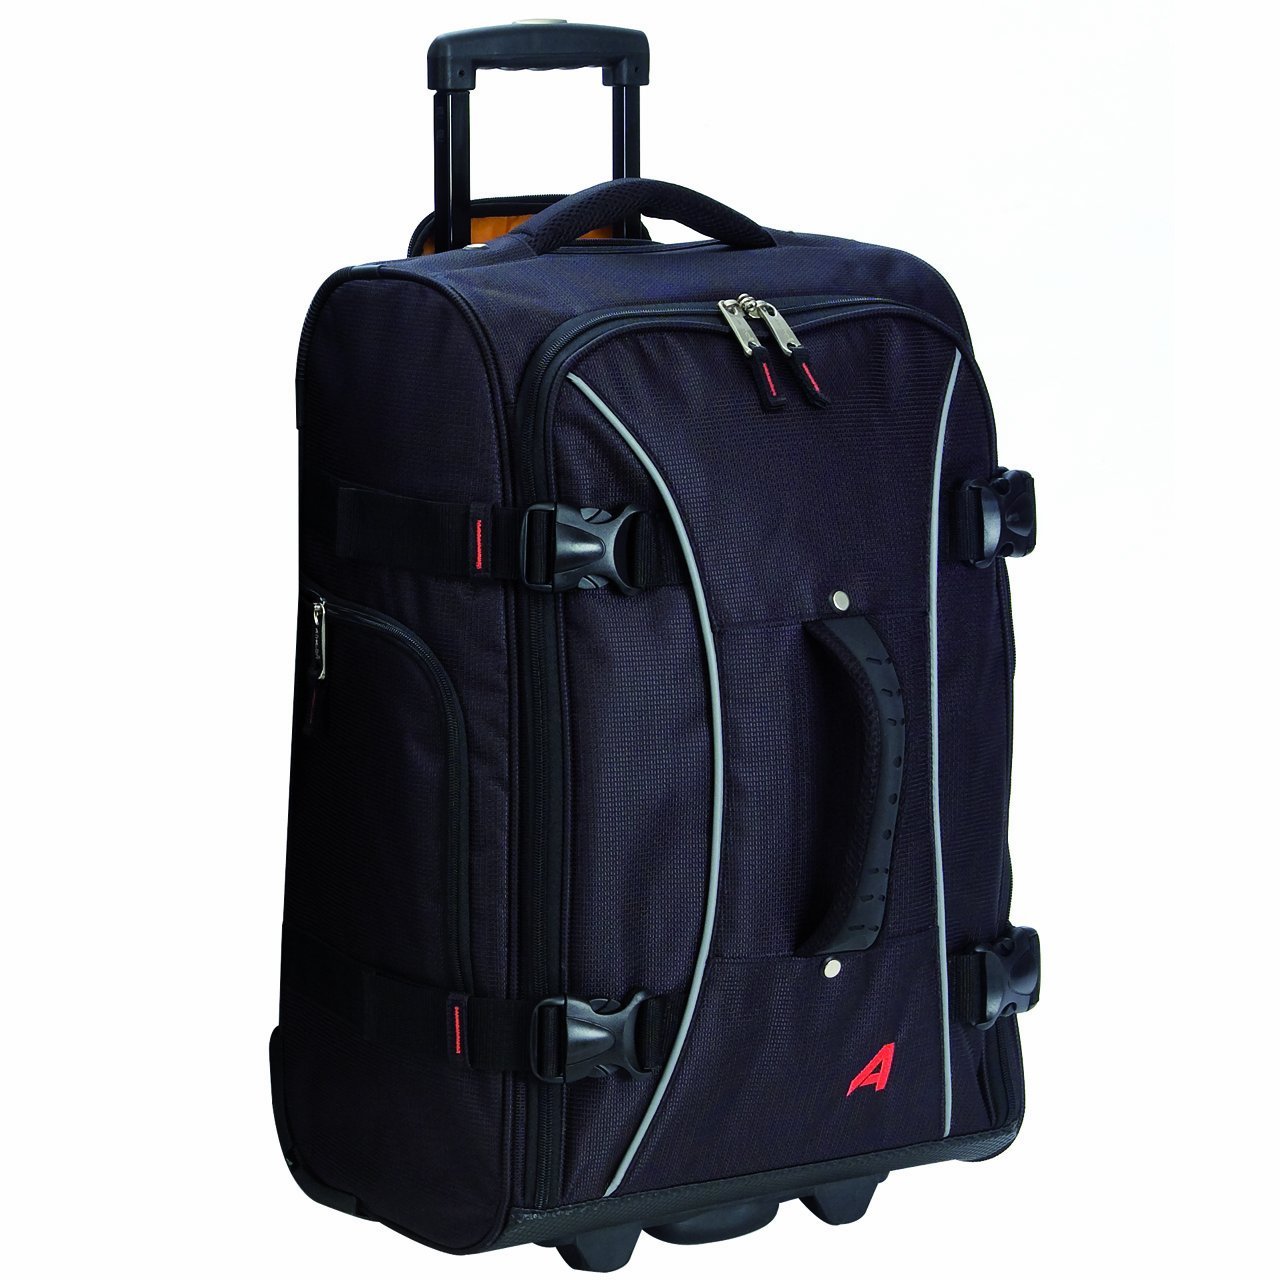 Best Travel Luggage In India - Best Design Idea